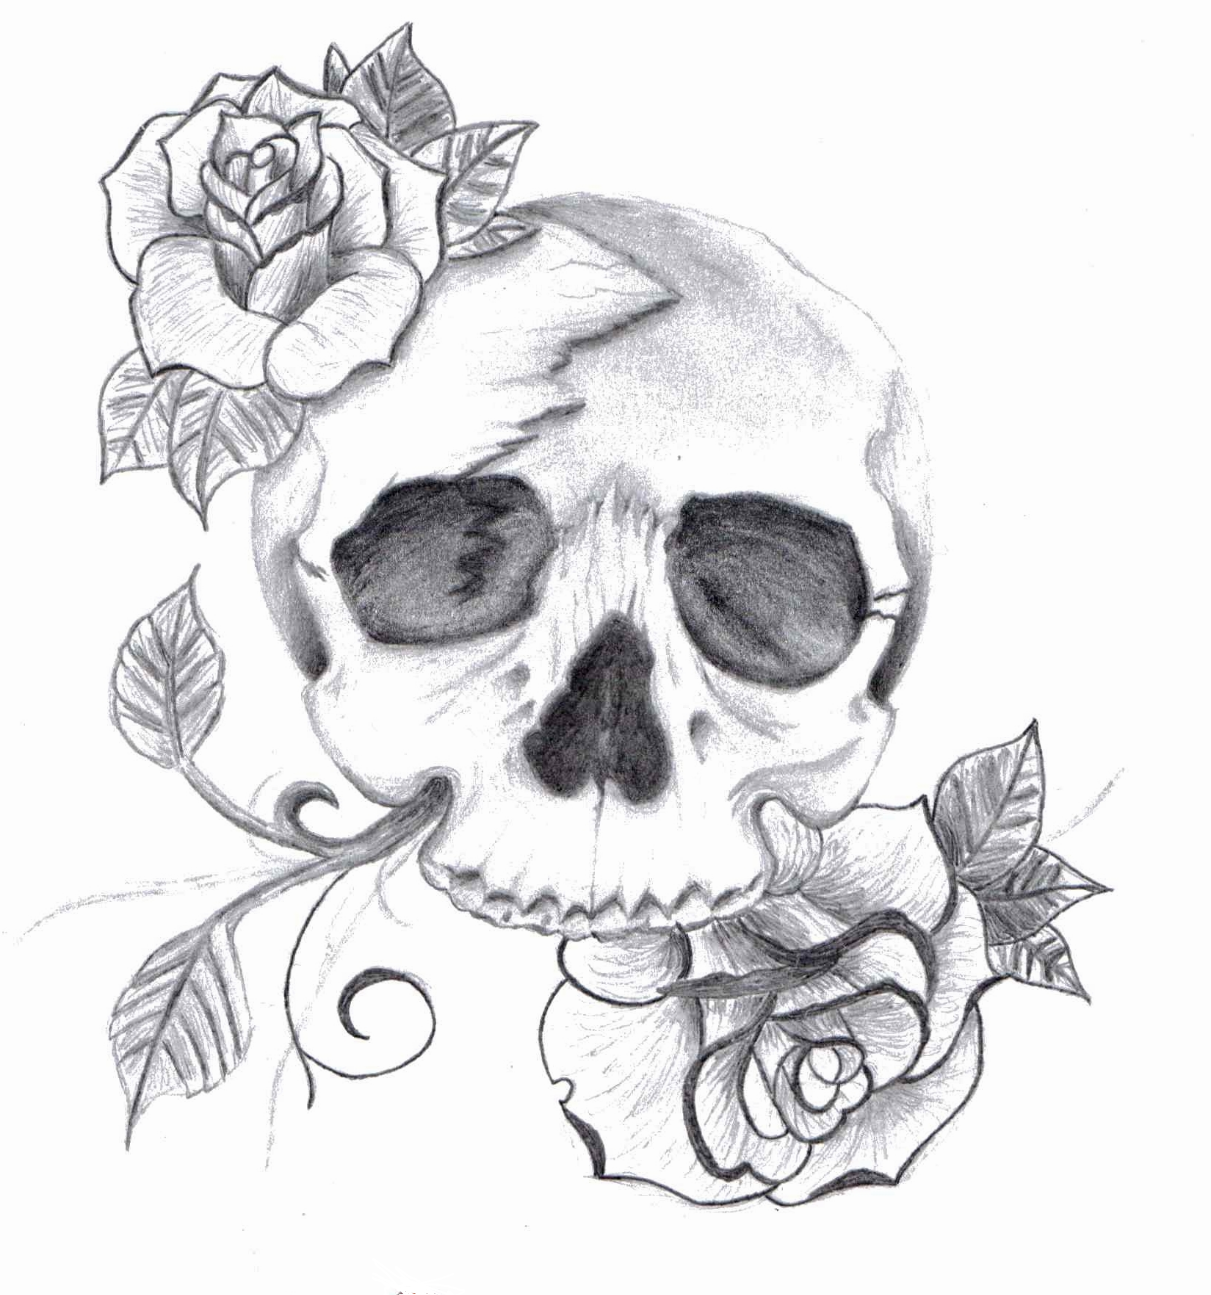 Free Skulls Drawings, Download Free Skulls Drawings png images, Free